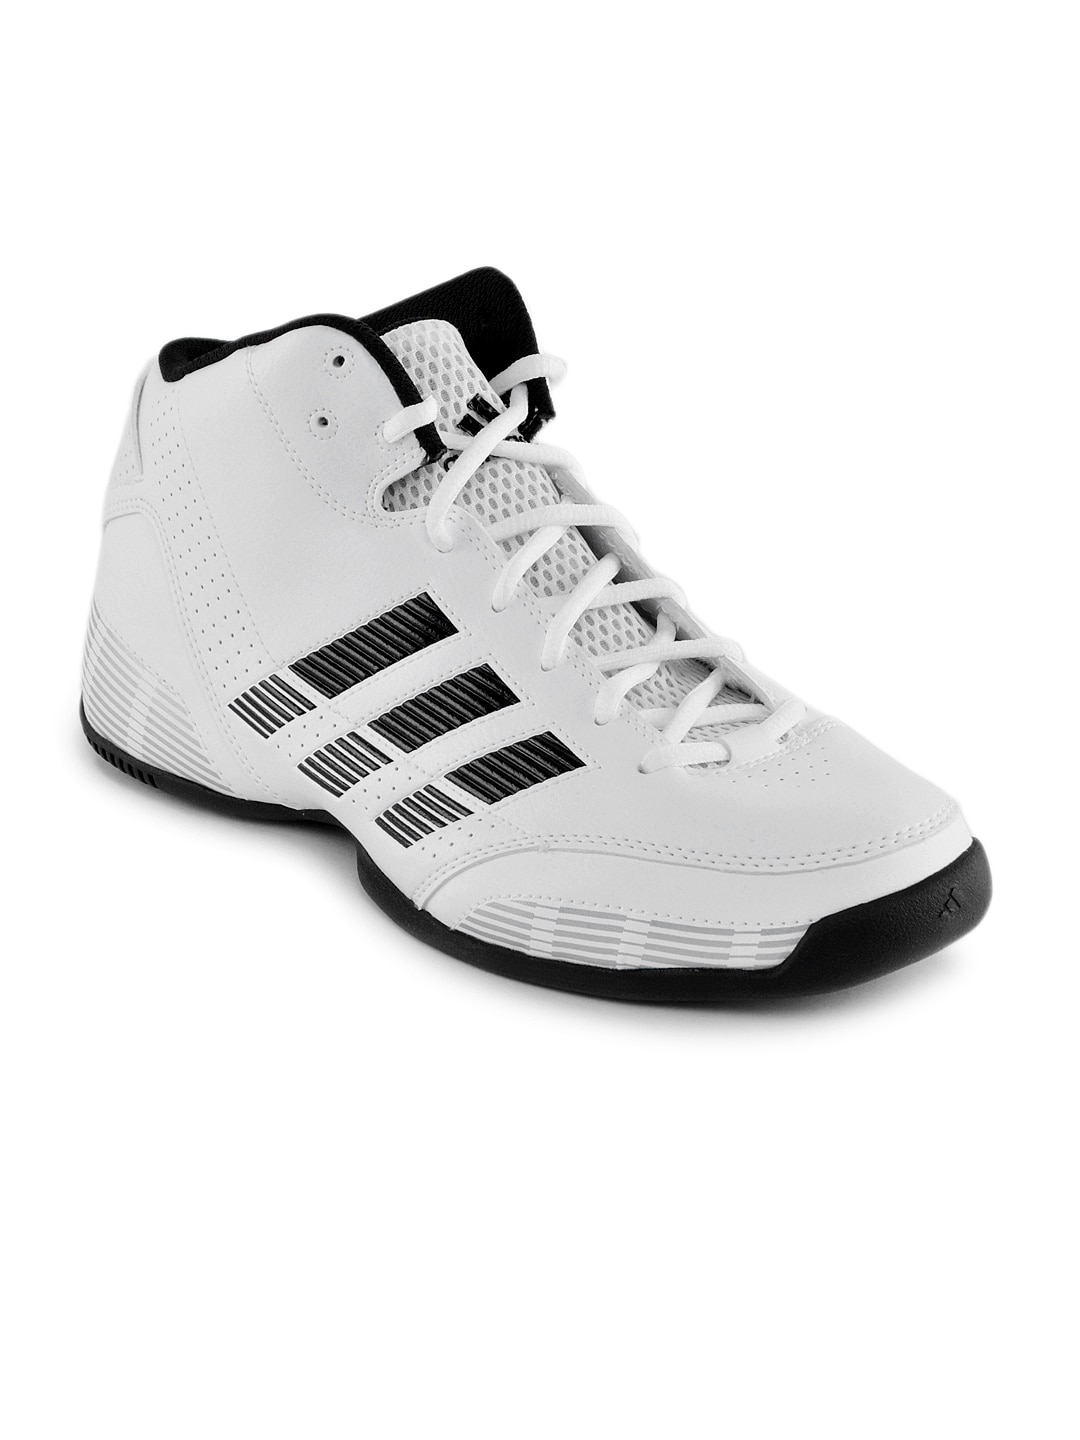 ADIDAS Men Series Light White Sports Shoes